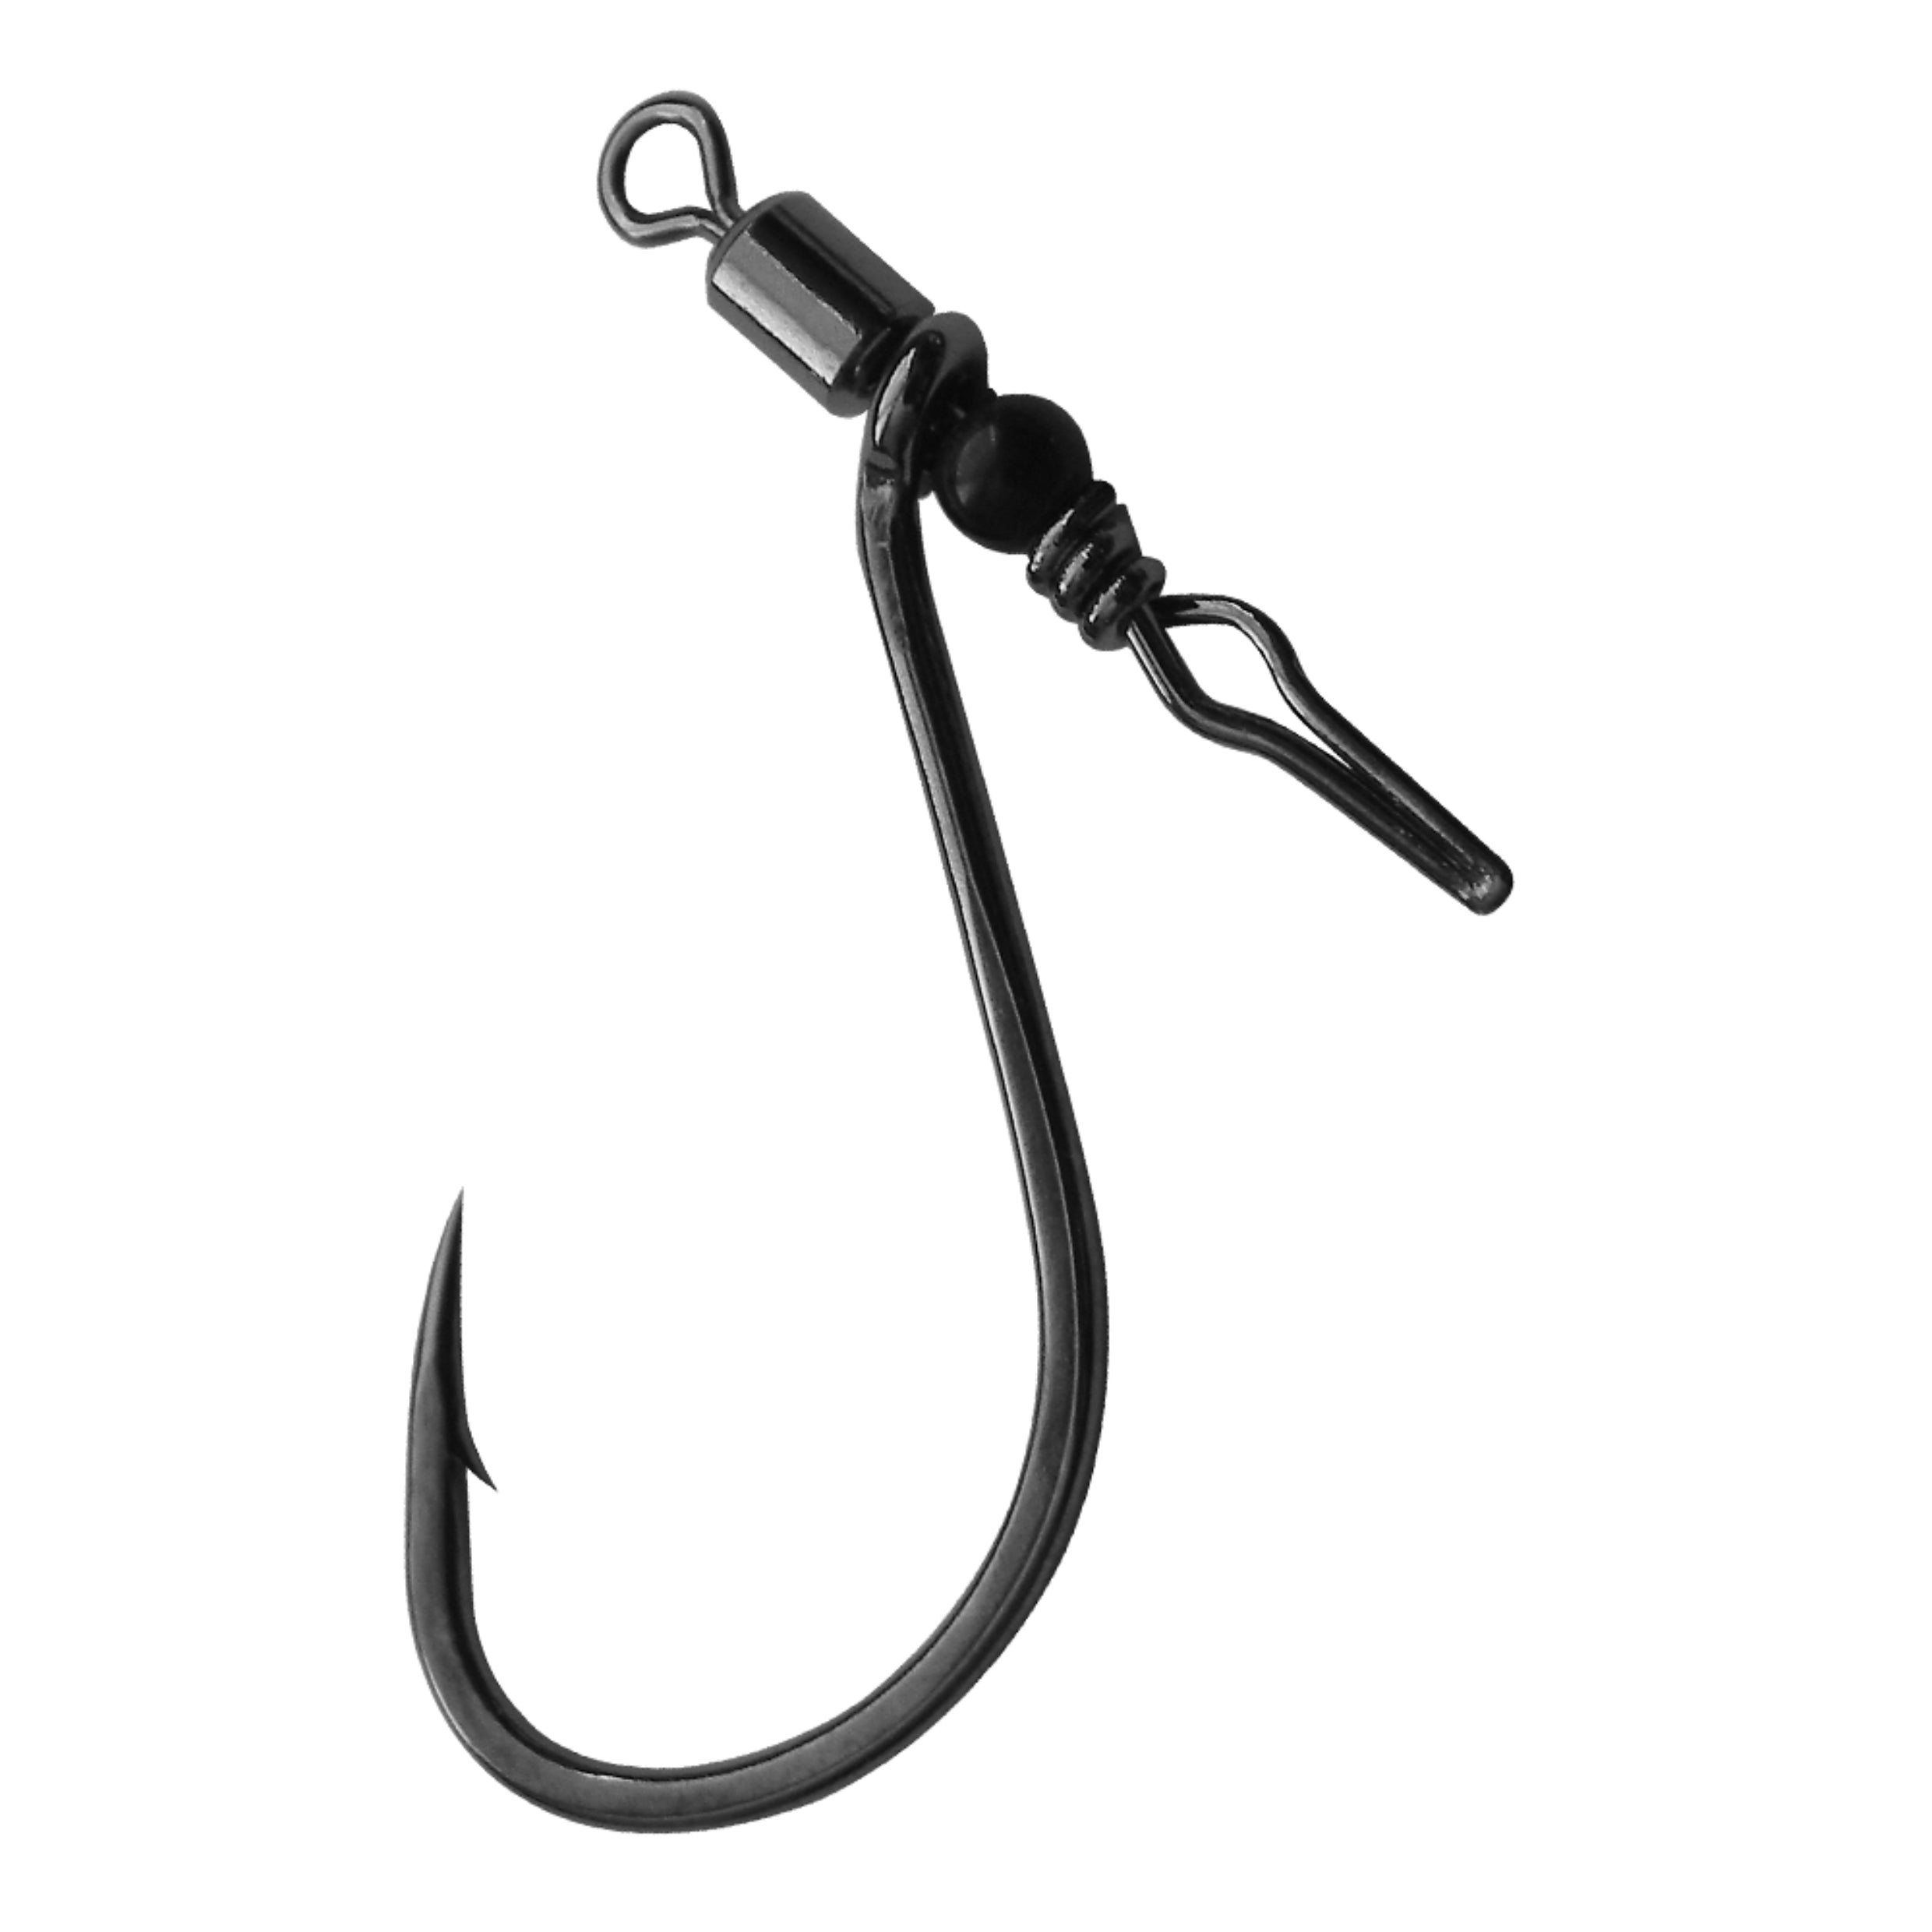 Gamakatsu new Bead Hook is a revolutionary designed fishing hook